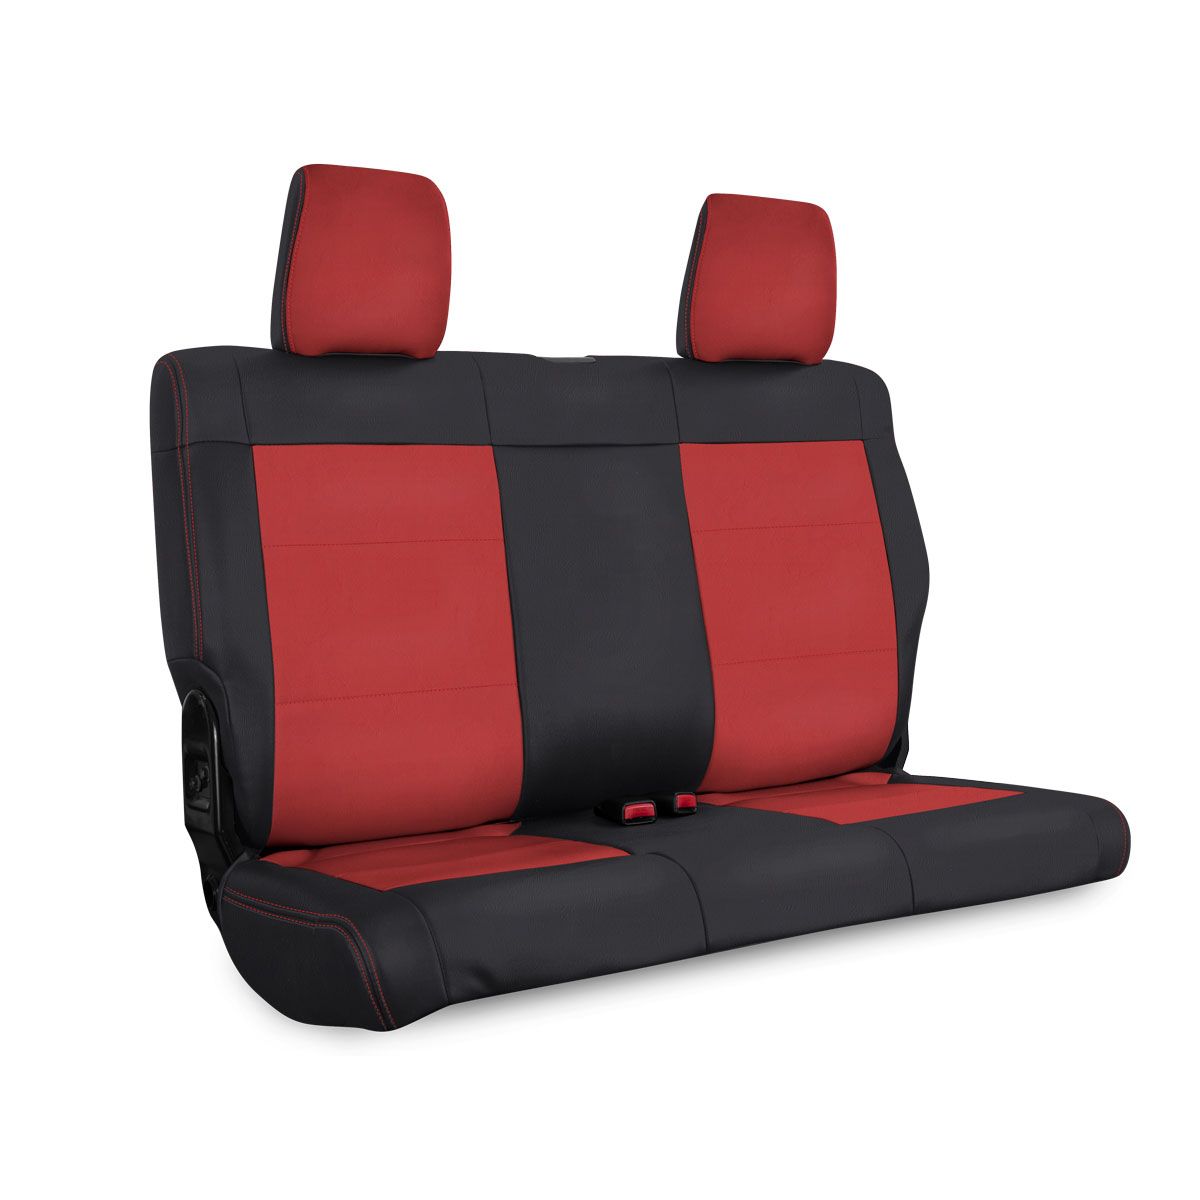 PRP 11-12 Jeep Wrangler JKU Rear Seat Cover/4 door - Black/Red